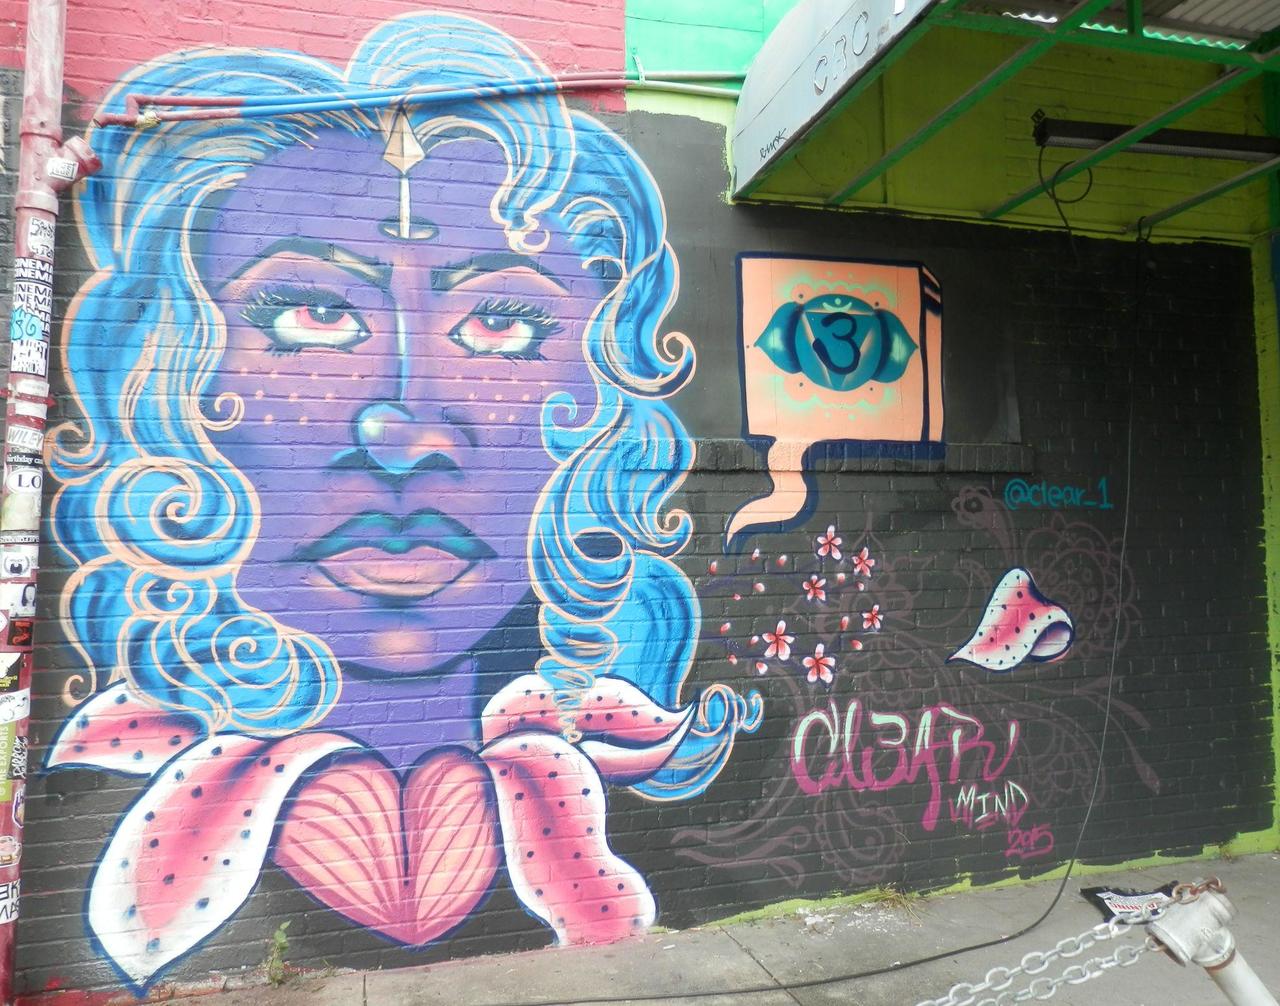 RT @JohnRMoffitt: #Houston #Graffiti #Streetart Clear's completed work for Meeting of Styles 2015. http://t.co/6pQt6jdzMt